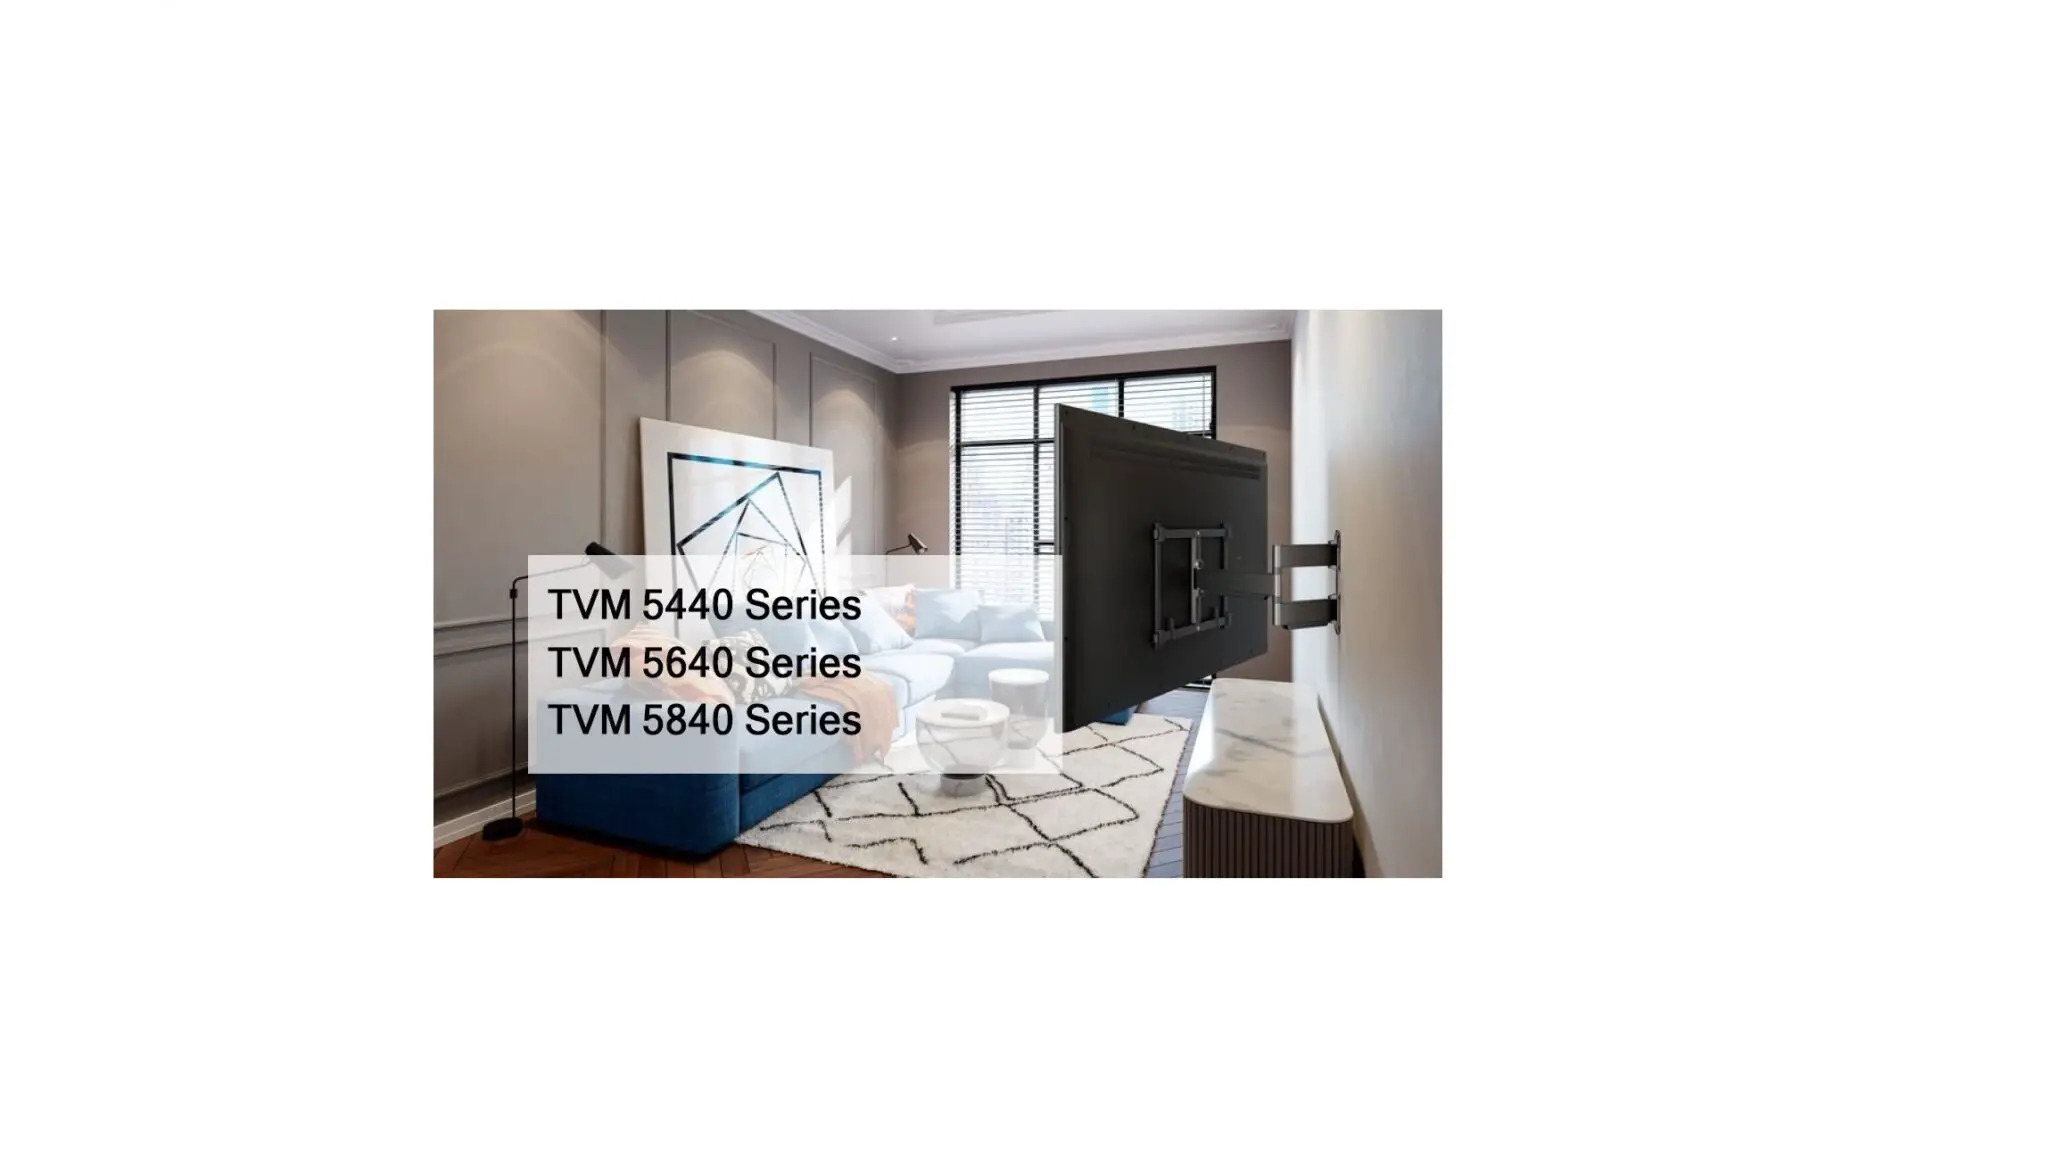 TVM 5440 Series